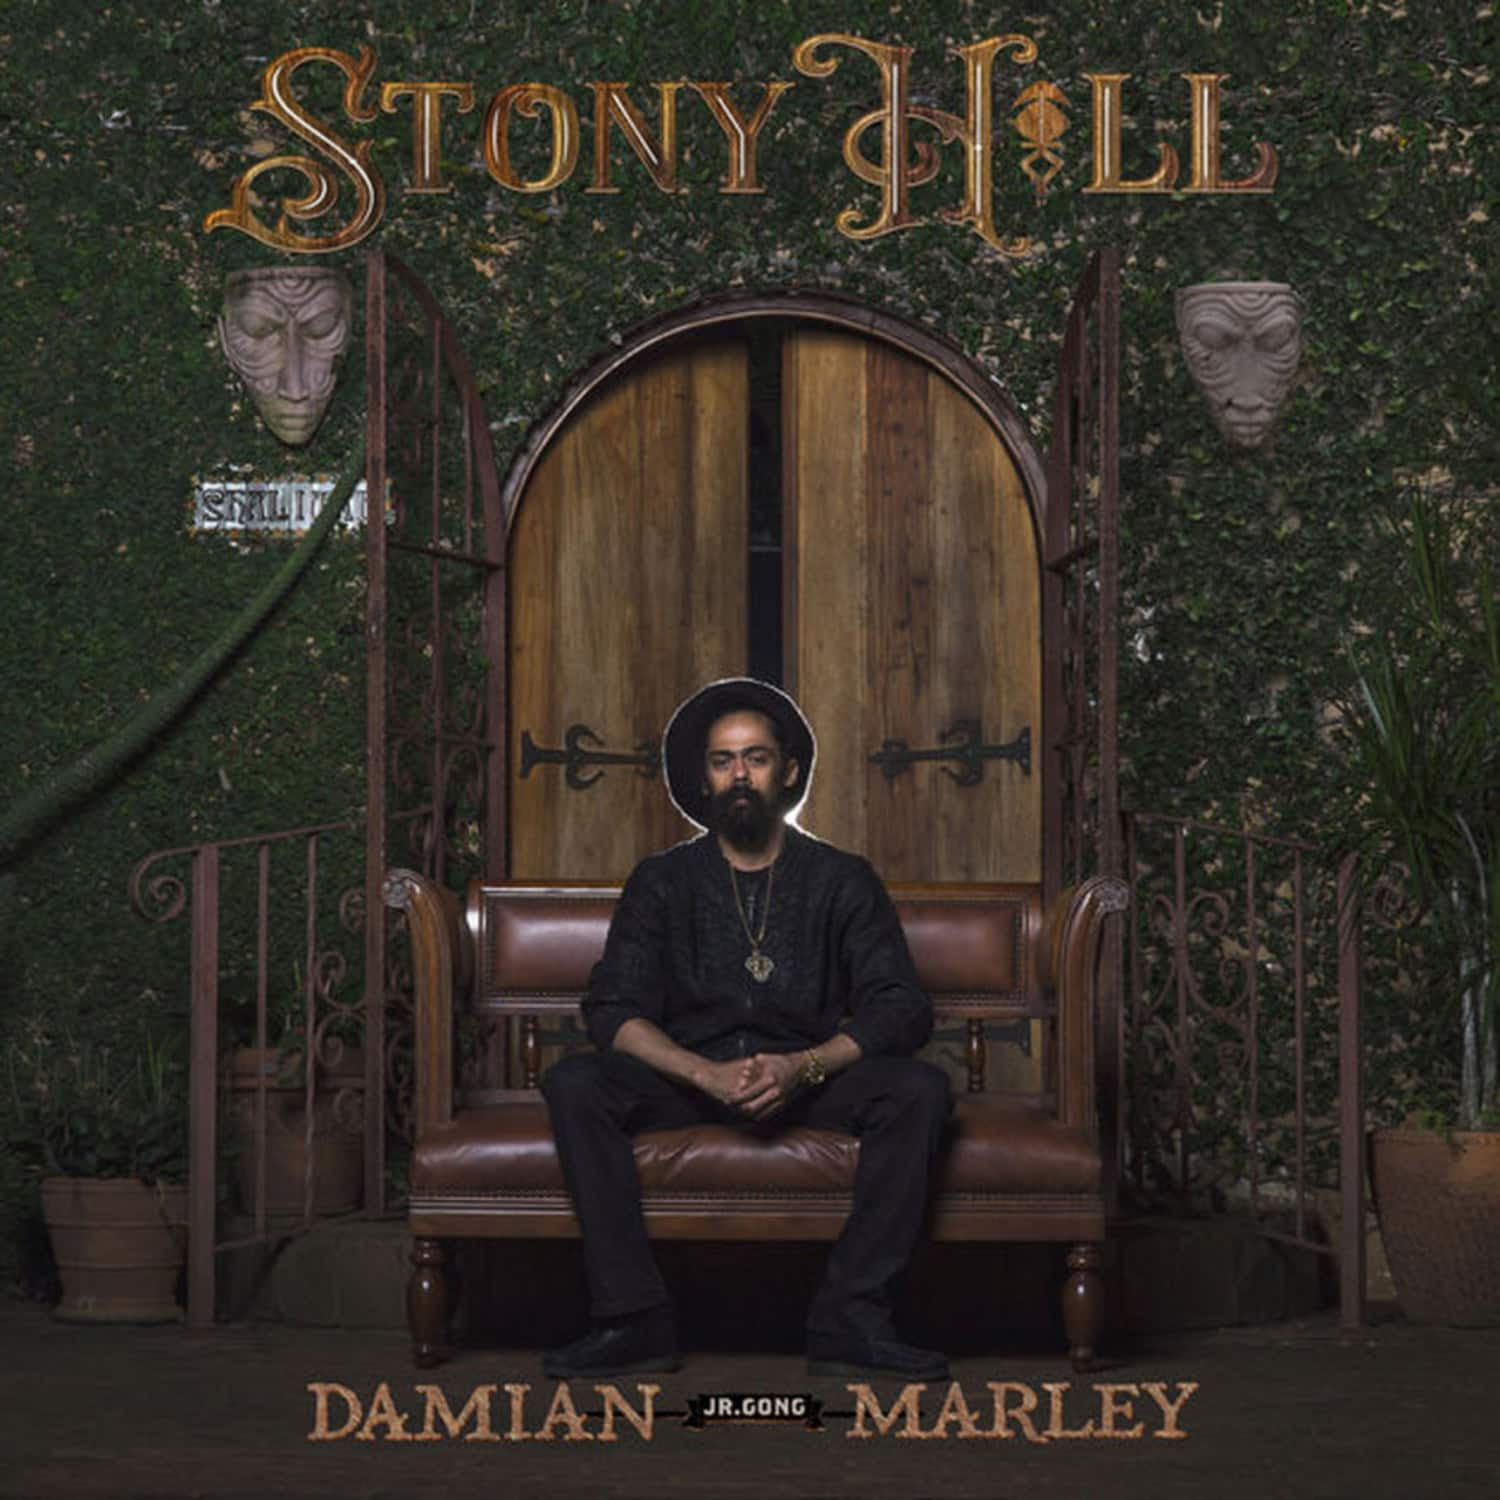 Damian Jr. Gong Marley - STONY HILL 